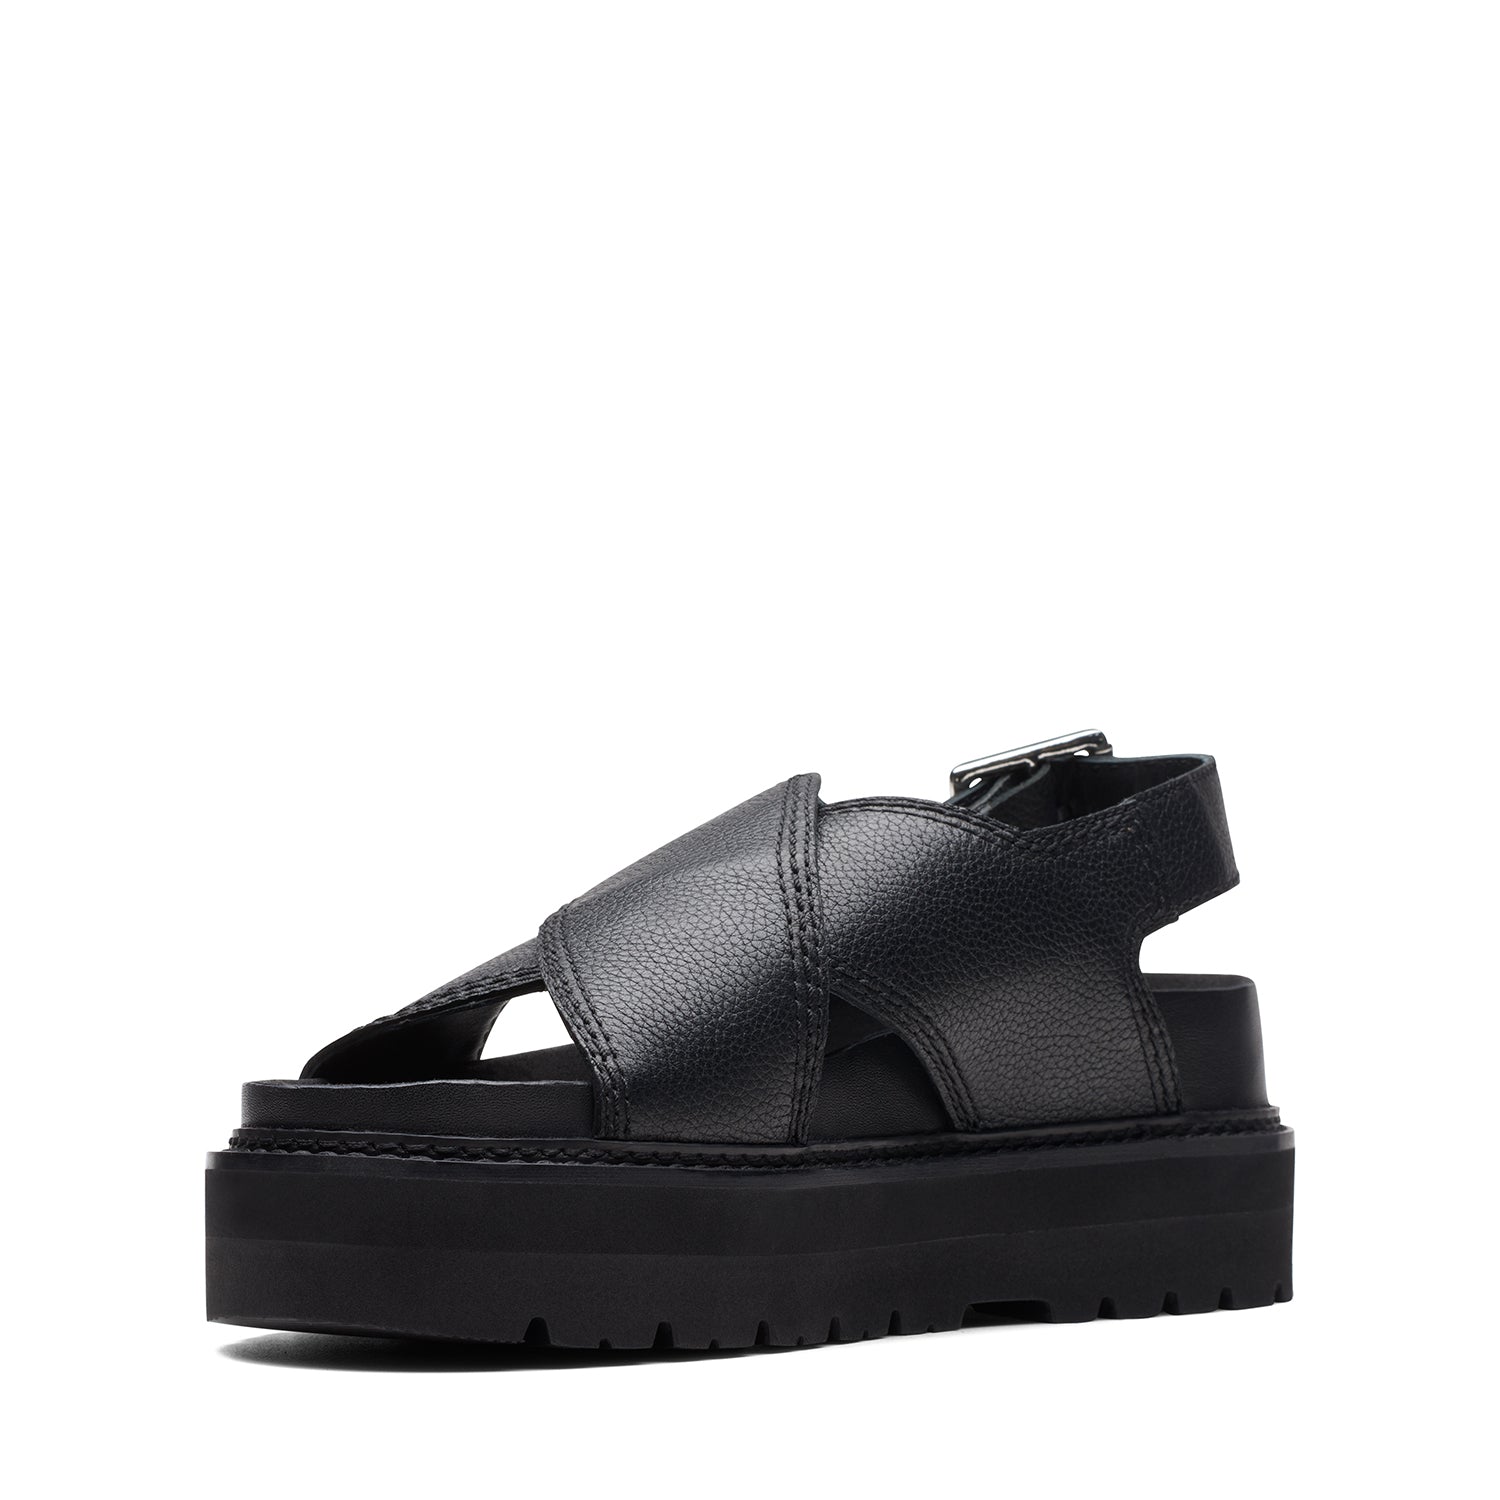 Clarks Orianna Roam - Sandals - Black Leather - 261710314 - D Width (S ...